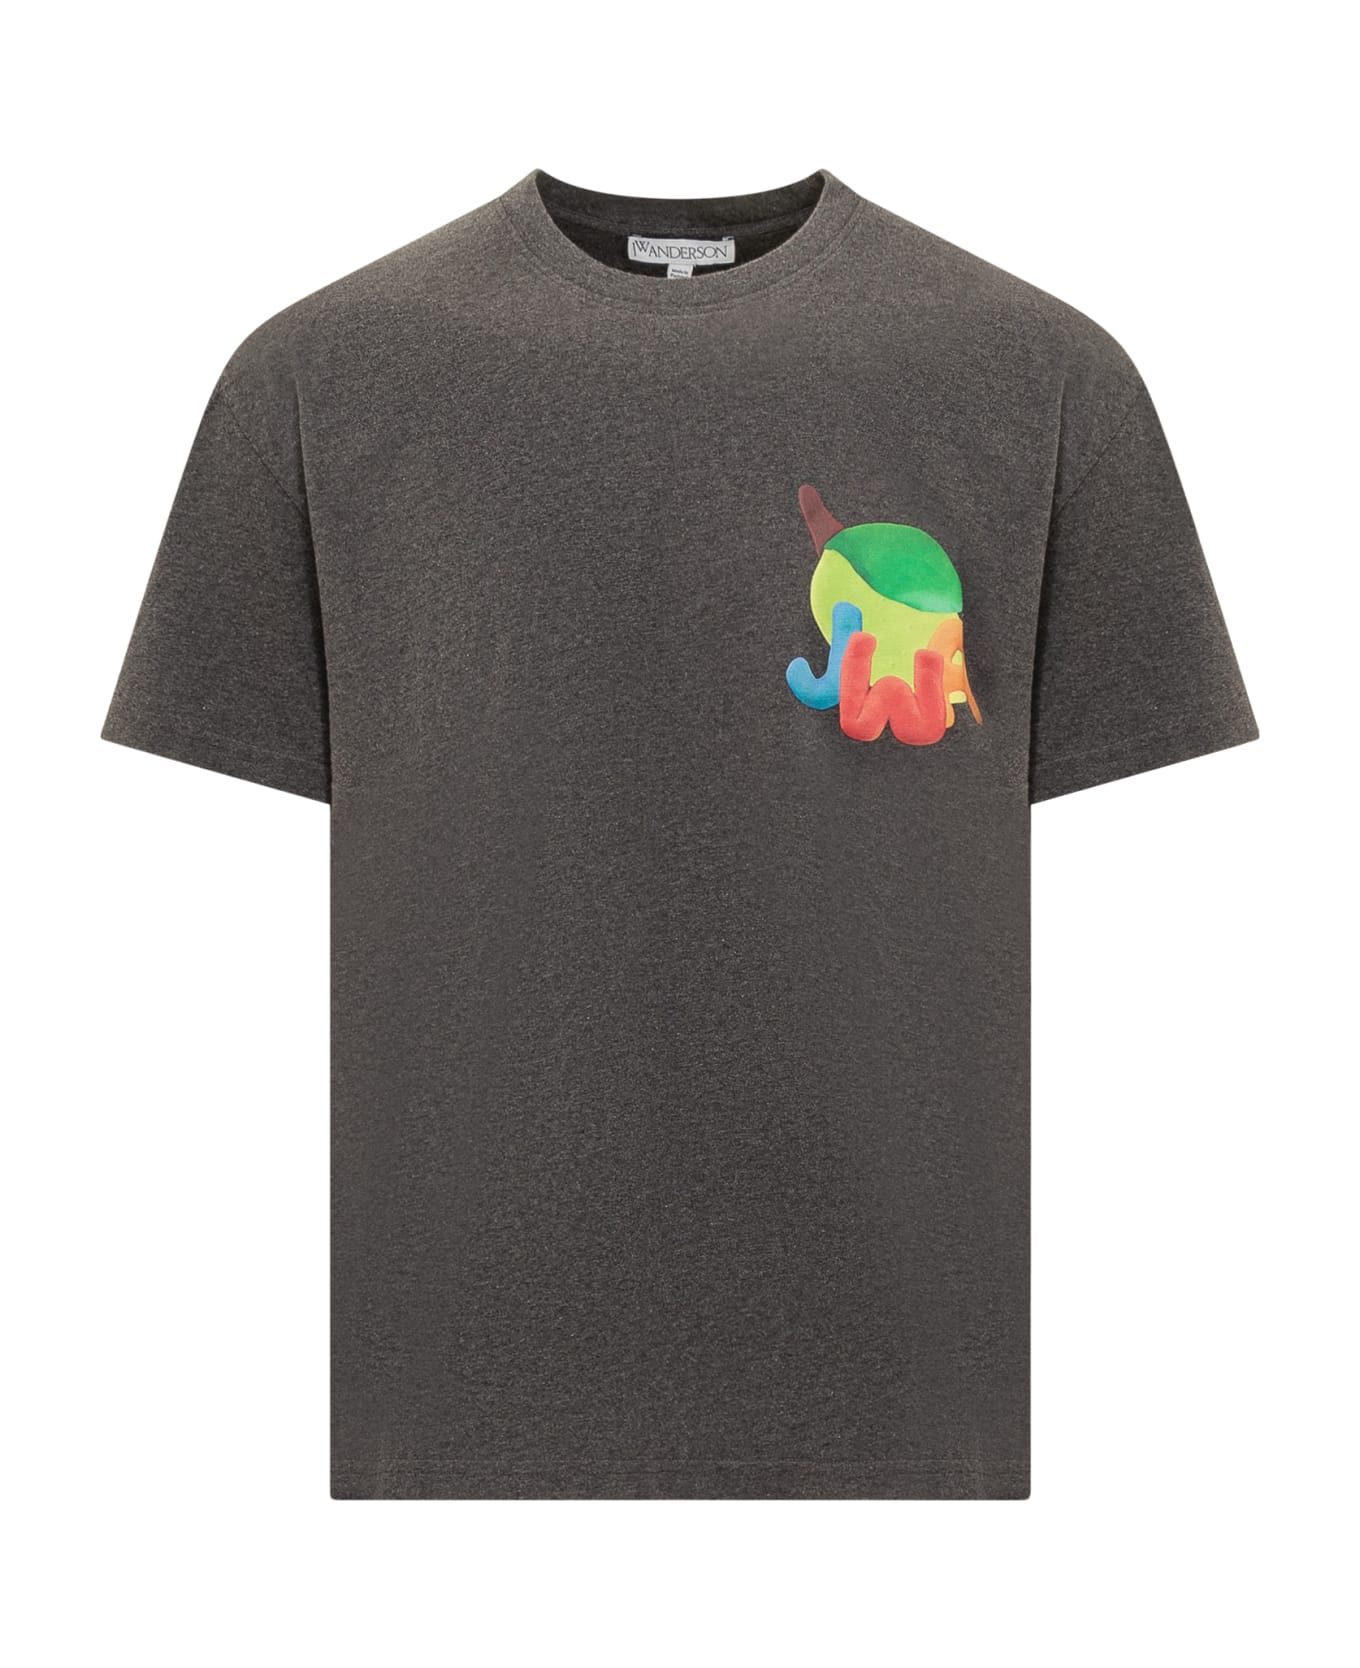 J.W. Anderson Digital Fruits T-shirt - CHARCOAL MELANGE